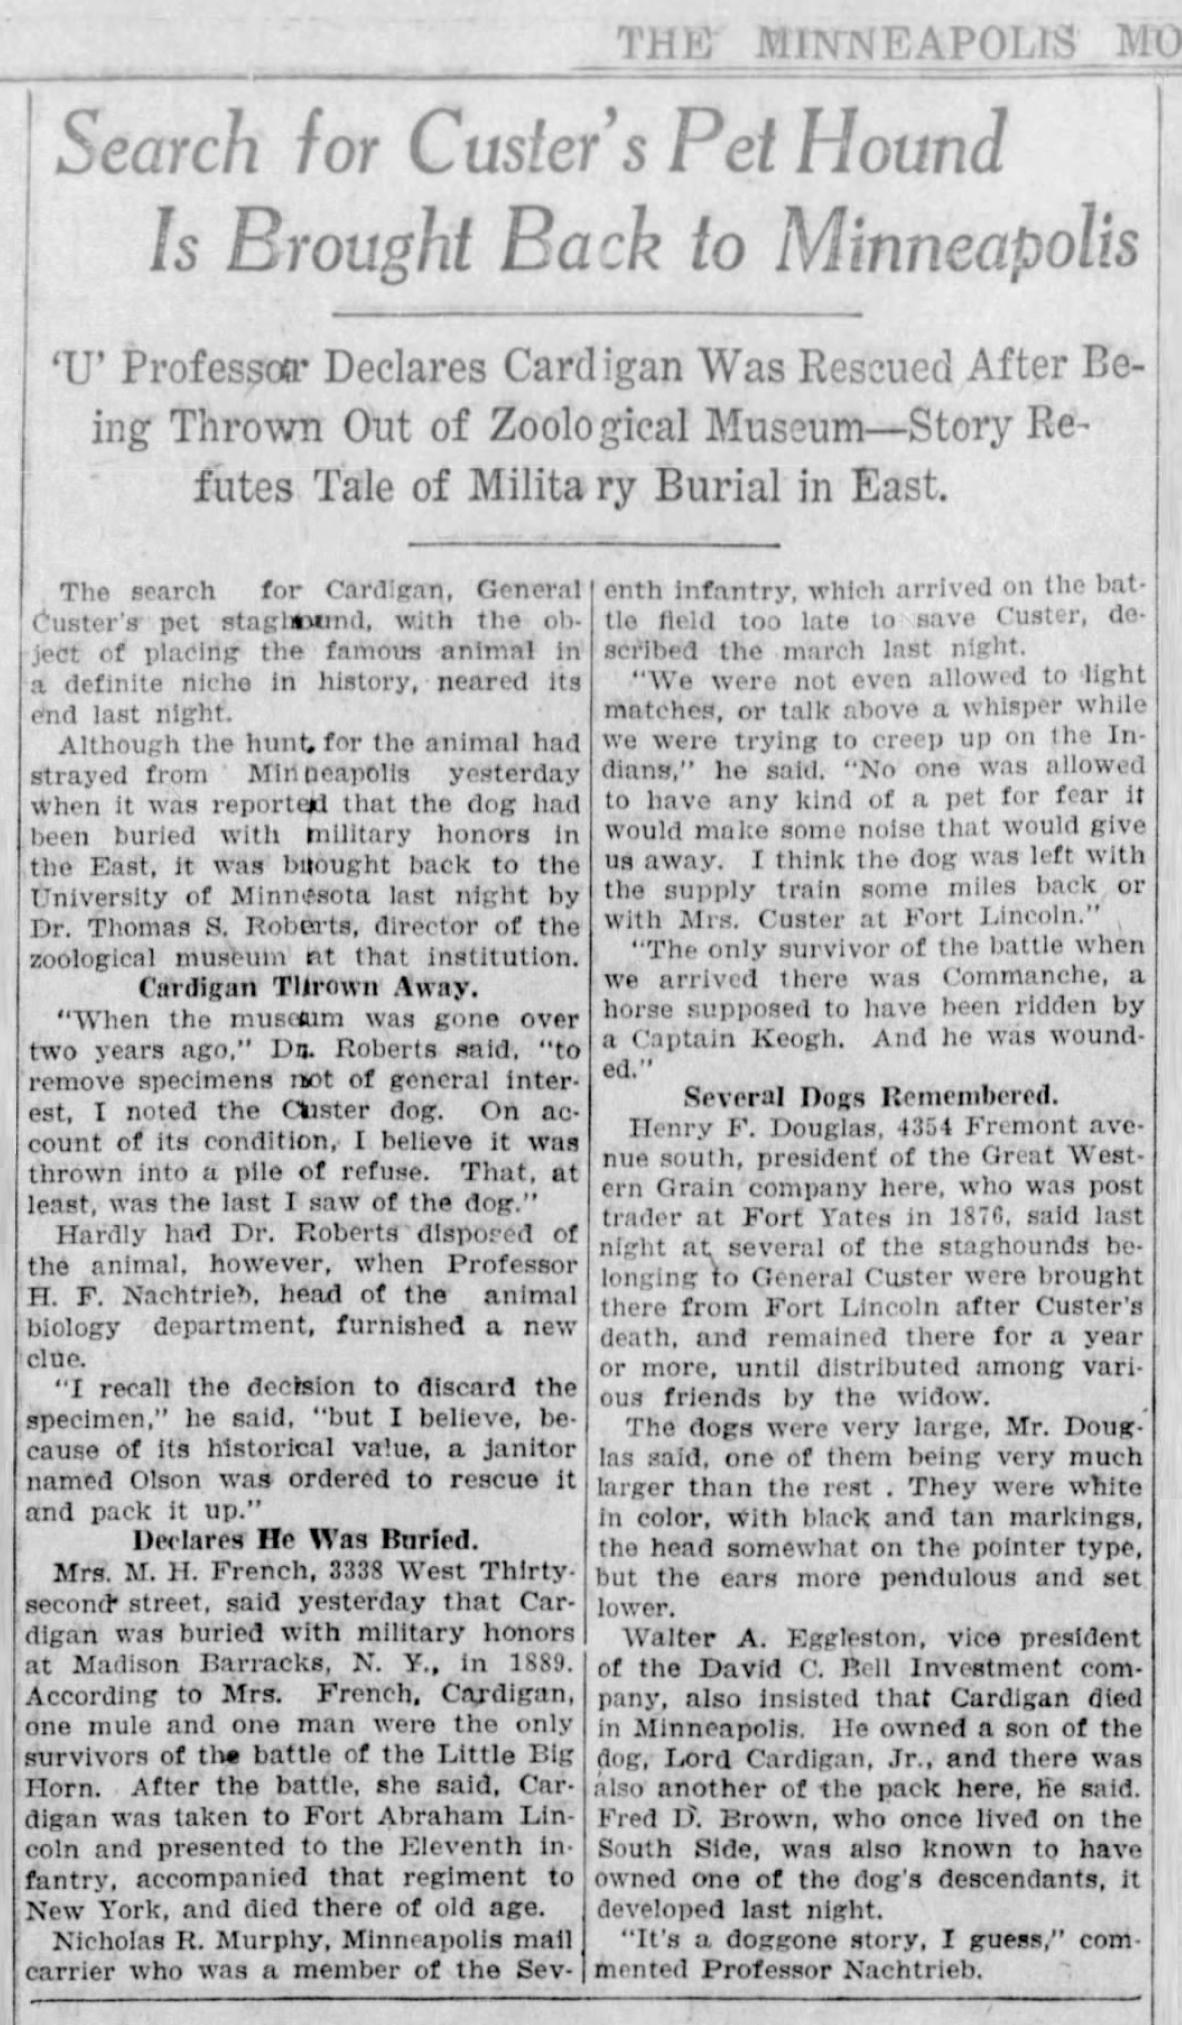 Minneapolis Tribune March 24, 1923 article